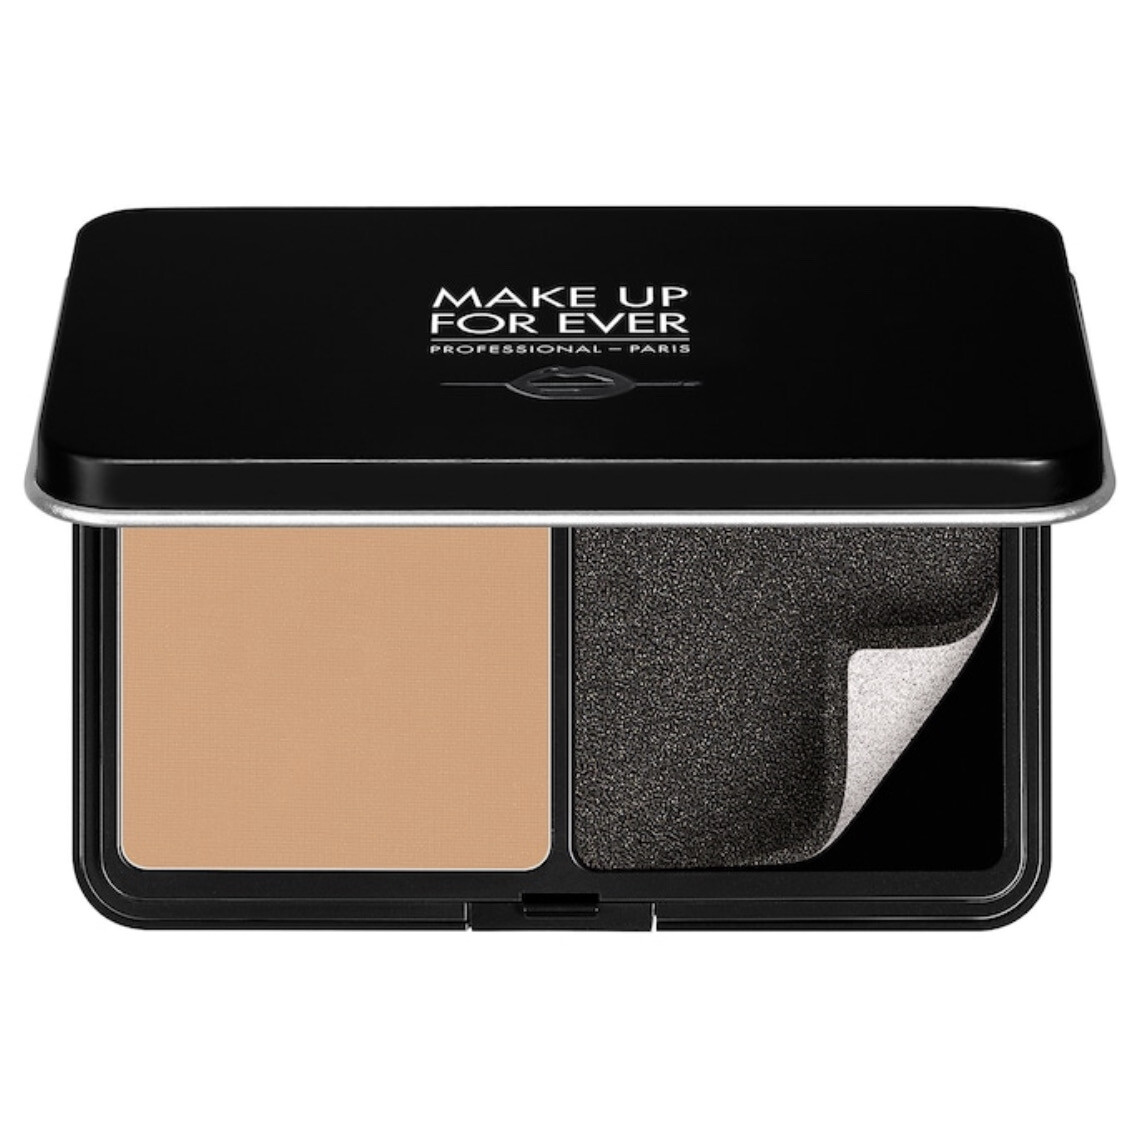 Make Up For Ever - Matte Velvet Skin Blurring Powder Foundation | Y335 Dark Sand - for medium skin with peach undertones